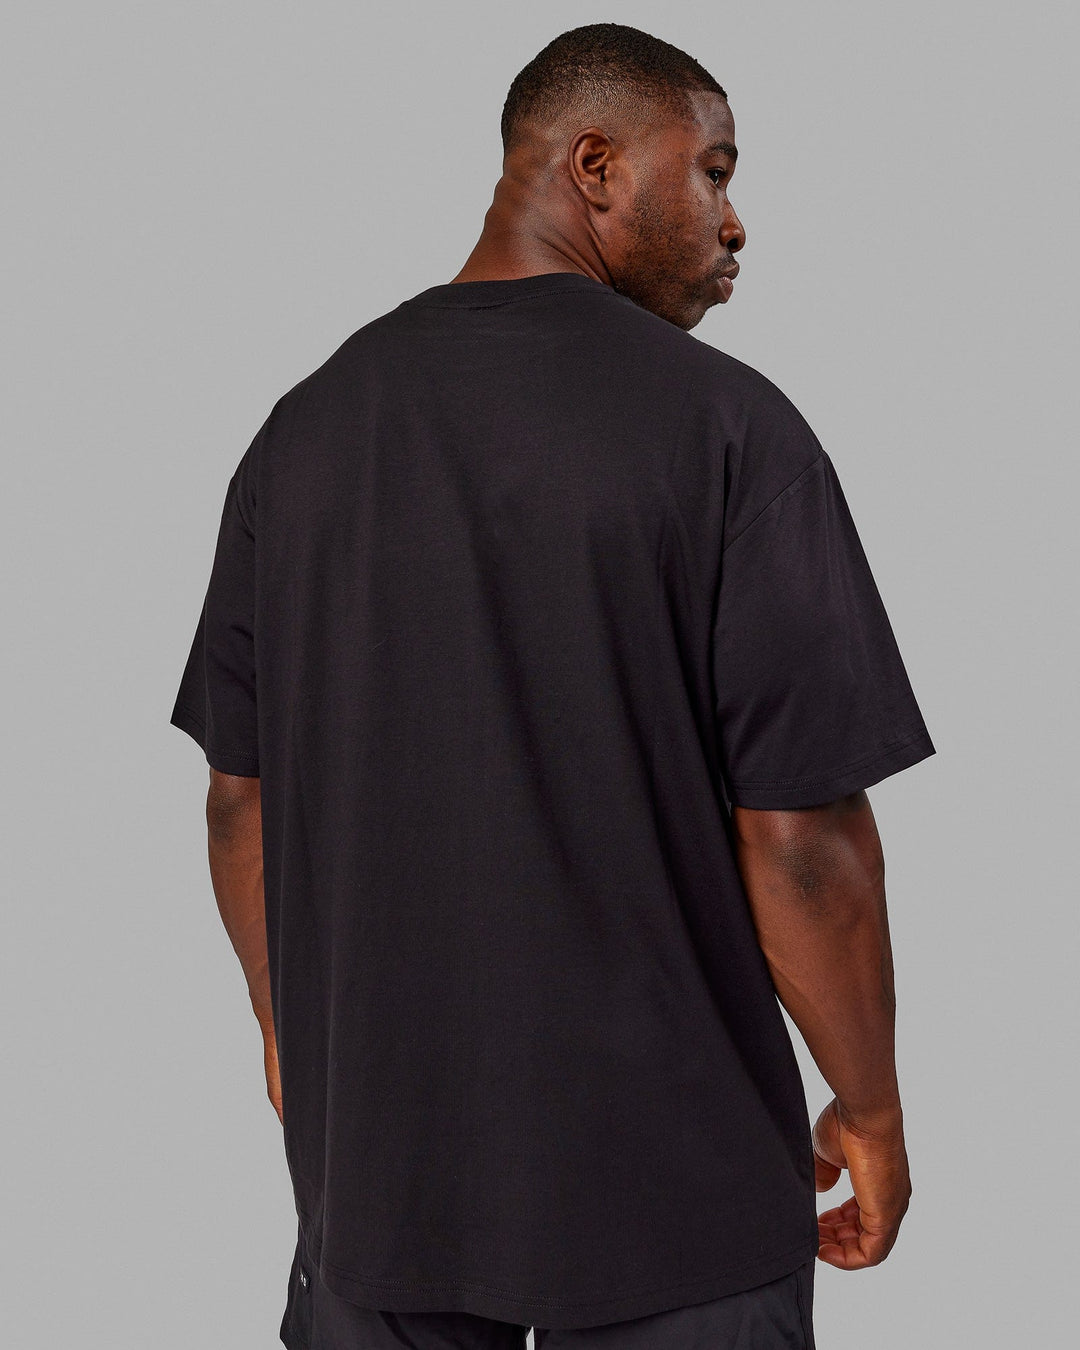 Man wearing Unisex Better Every Day FLXCotton Tee Oversize - Black-Ultimate Grey